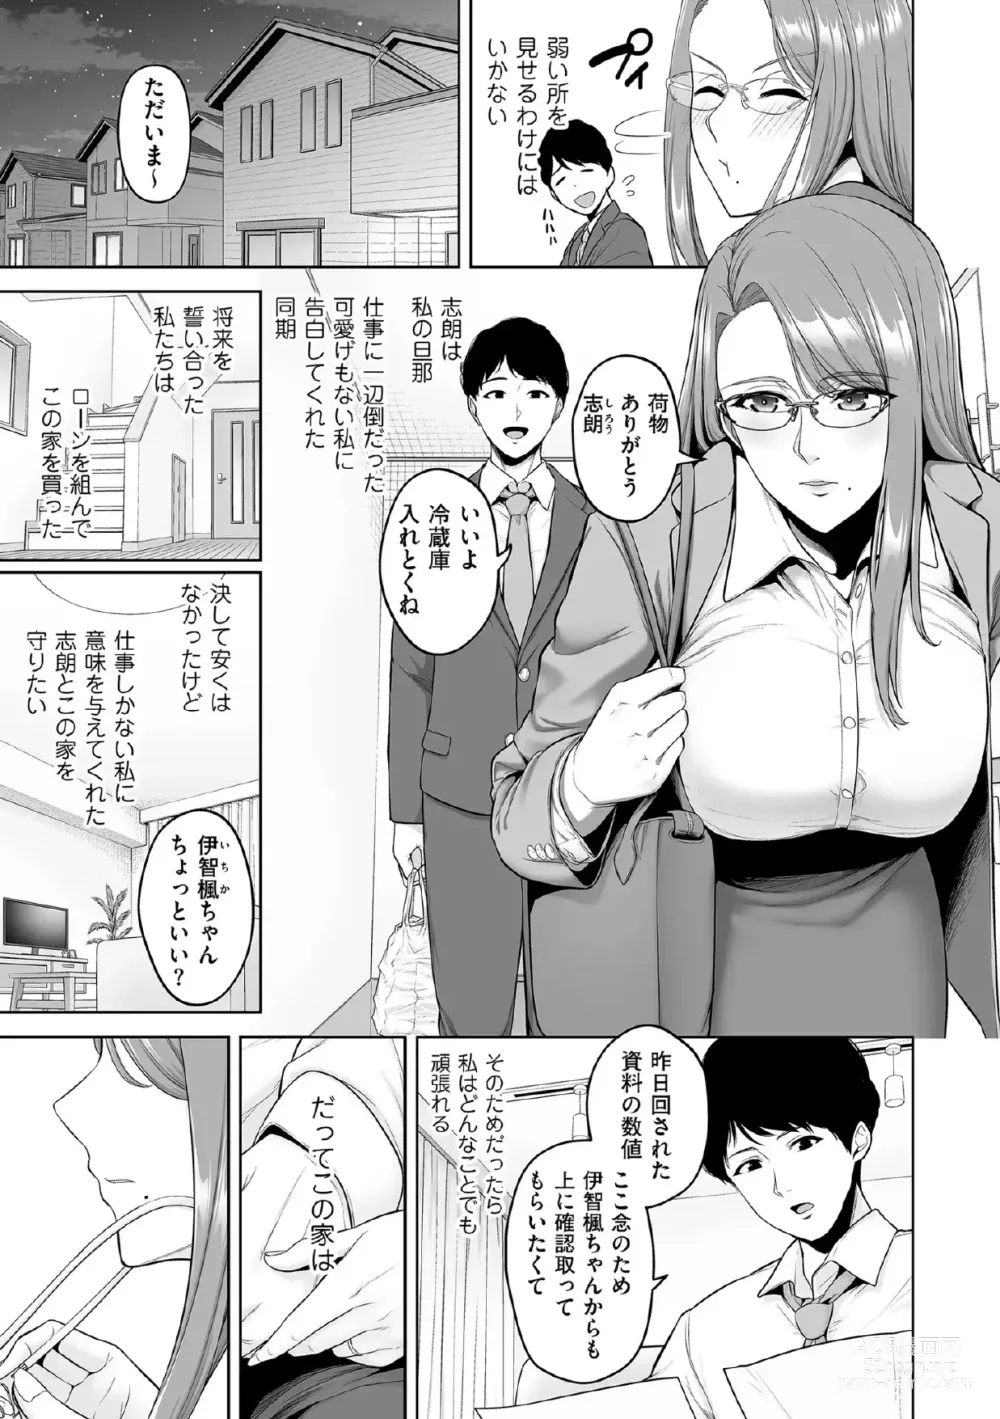 Page 3 of manga 本性 chapter 01-03